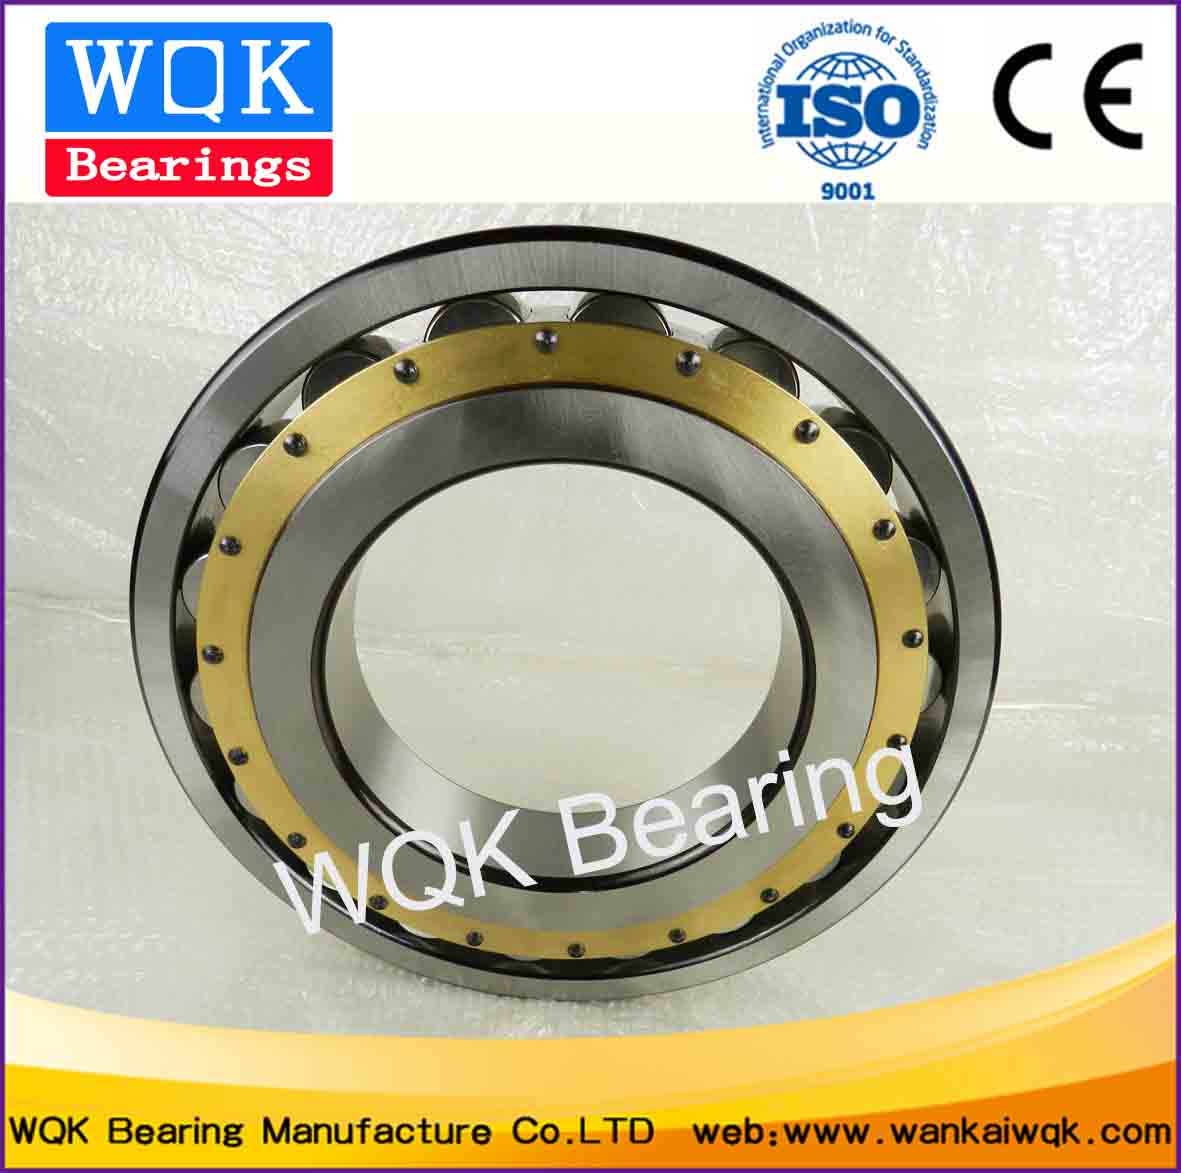 20244 MB single row spherical roller bearing WQK bearing ex-stocks